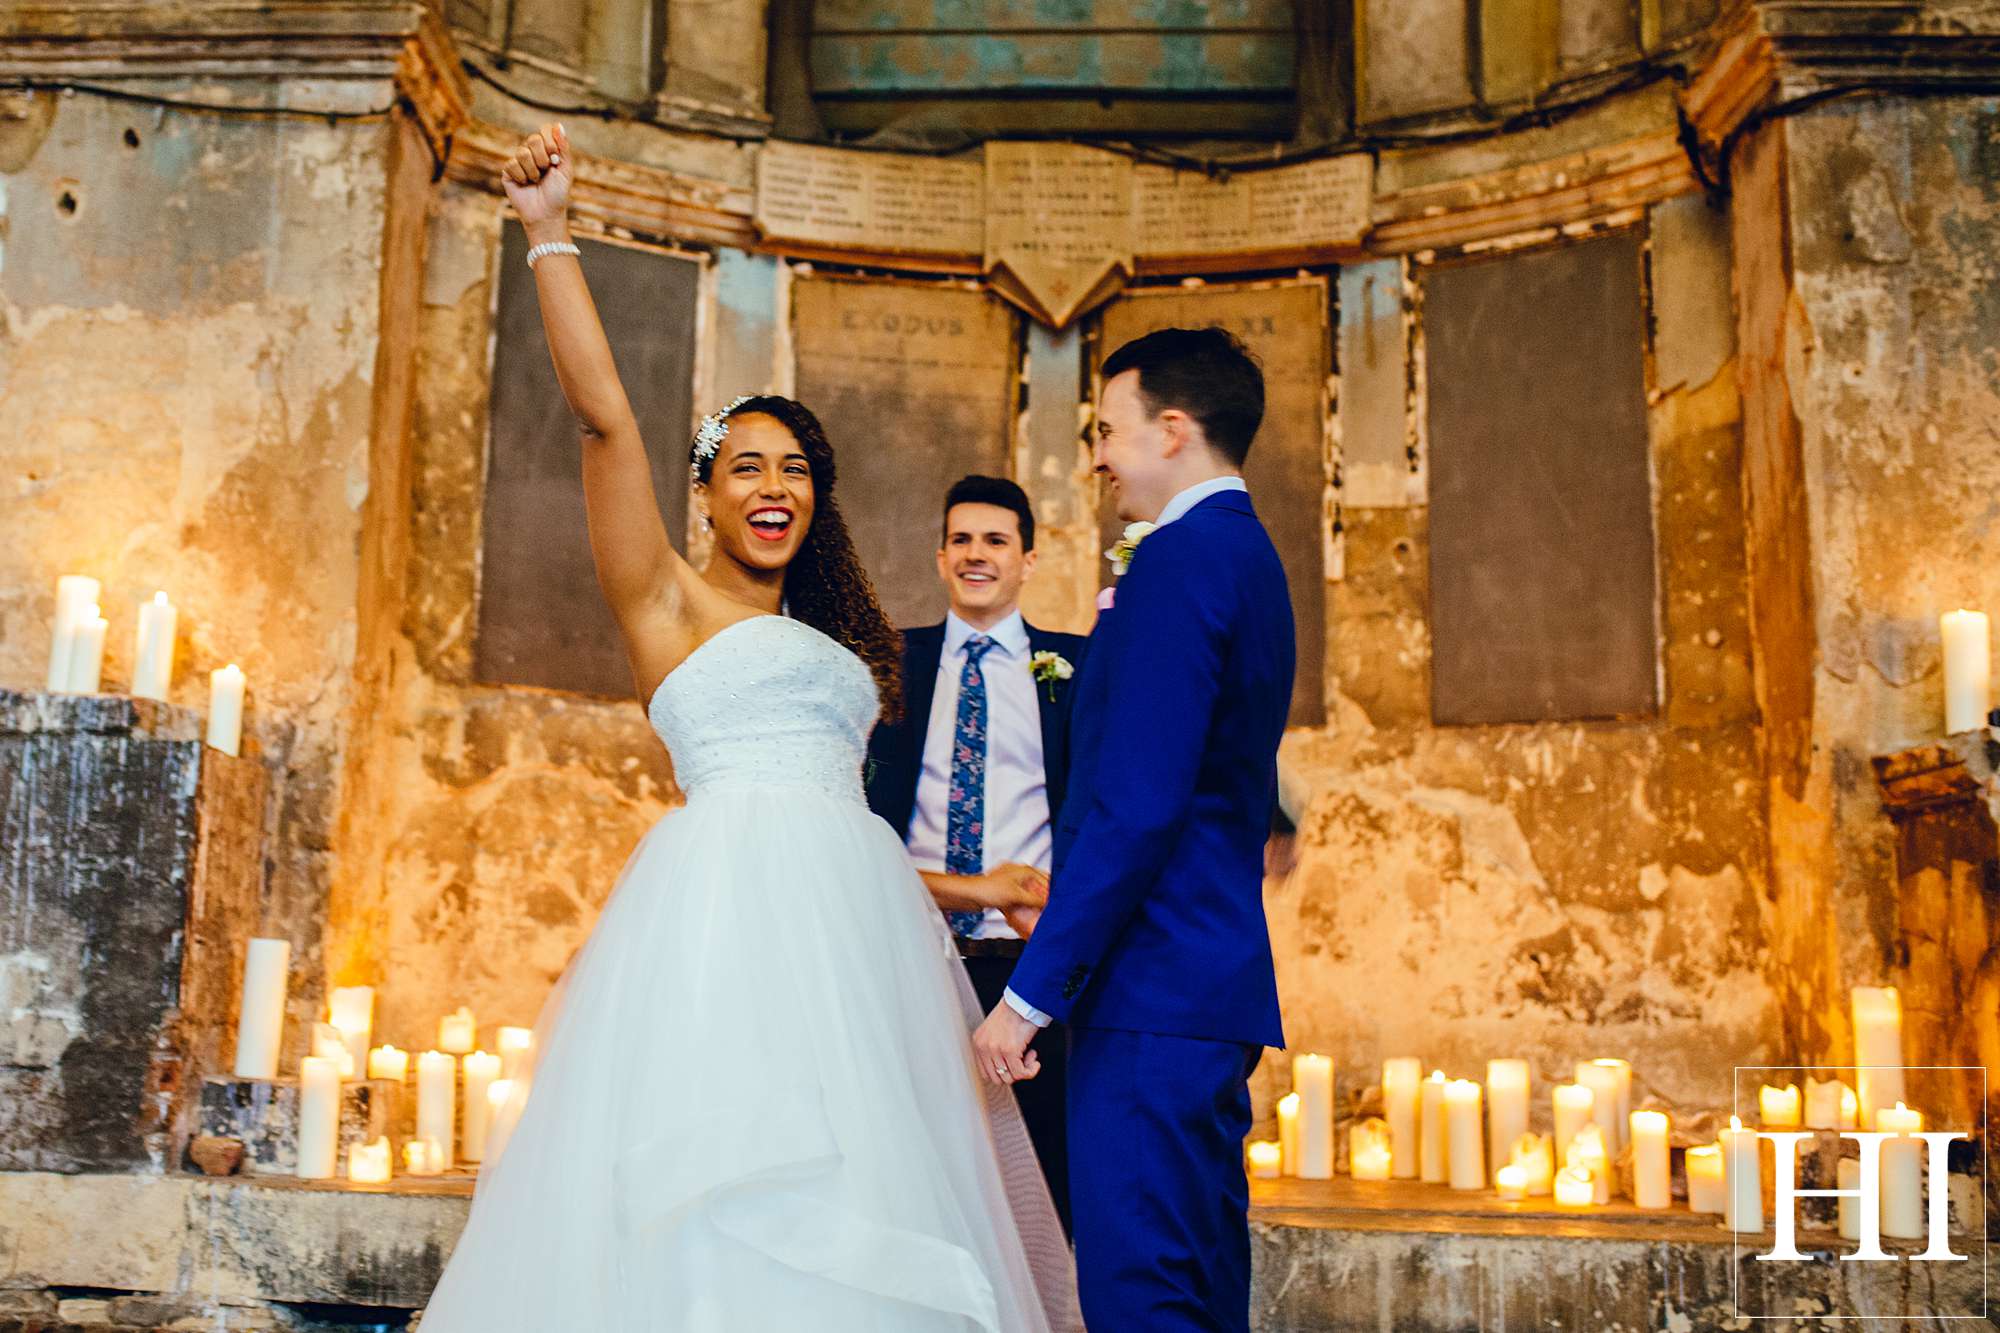 Best wedding photography Leeds 2018 by Hamish Irvine Wedding Photographer best of 2018 highlights yorkshire wedding photography